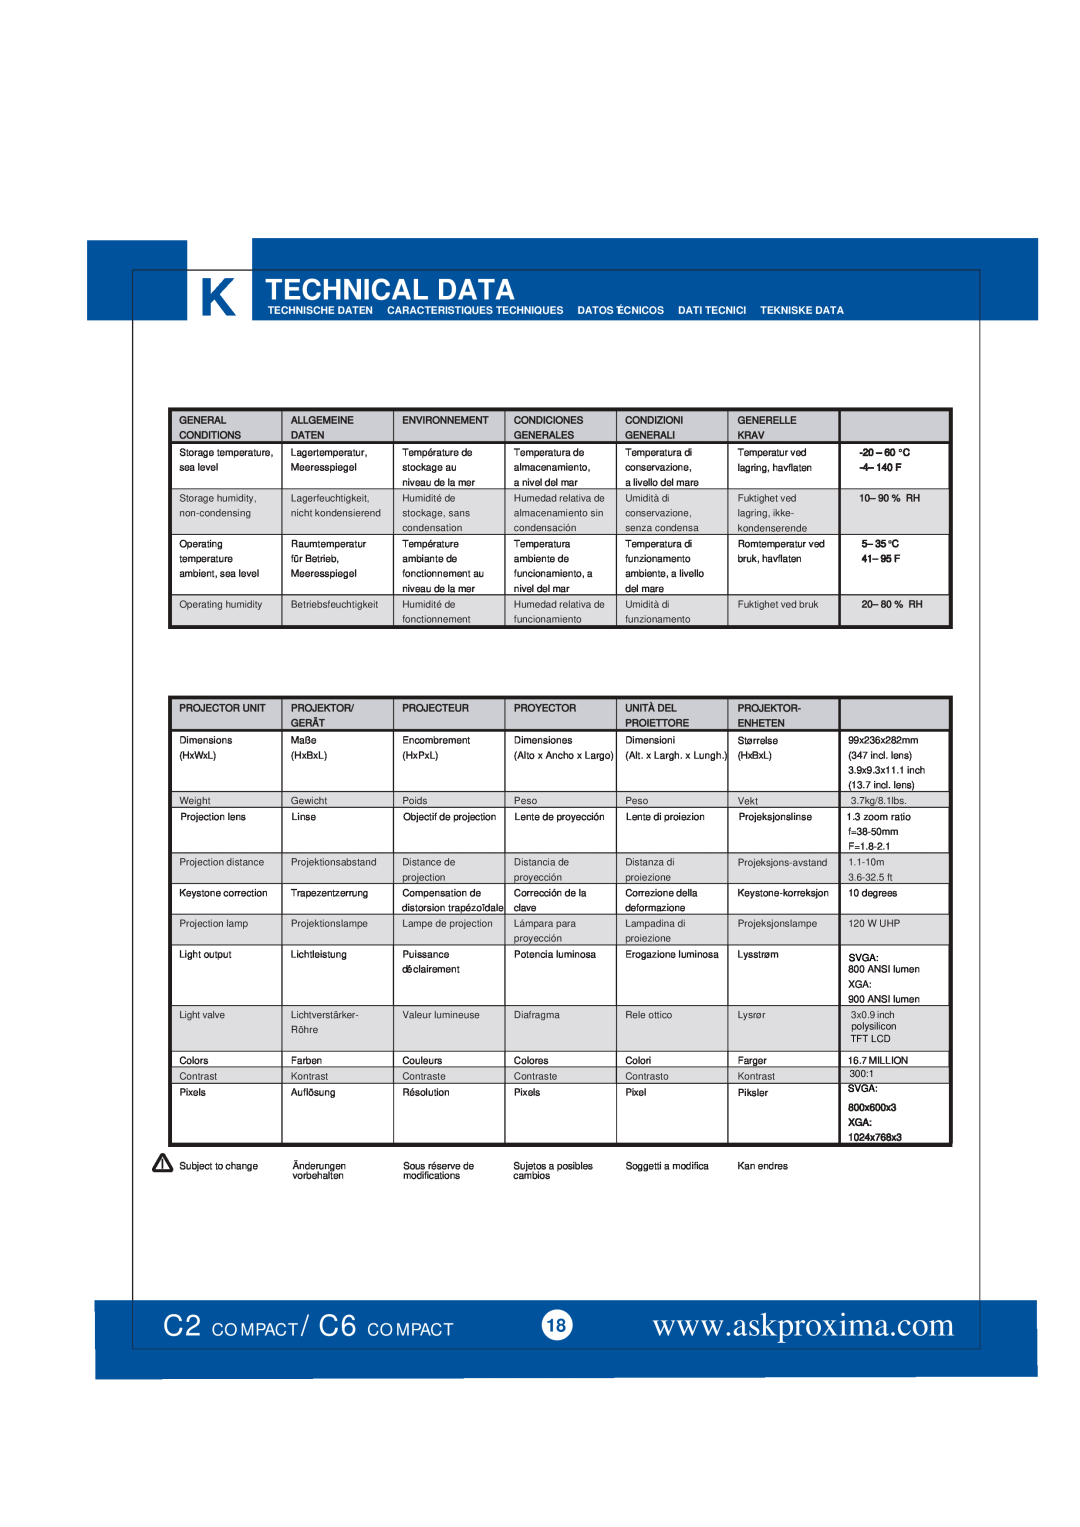 Ask Proxima manual Technical Data, C2 COMPACT / C6 COMPACT 